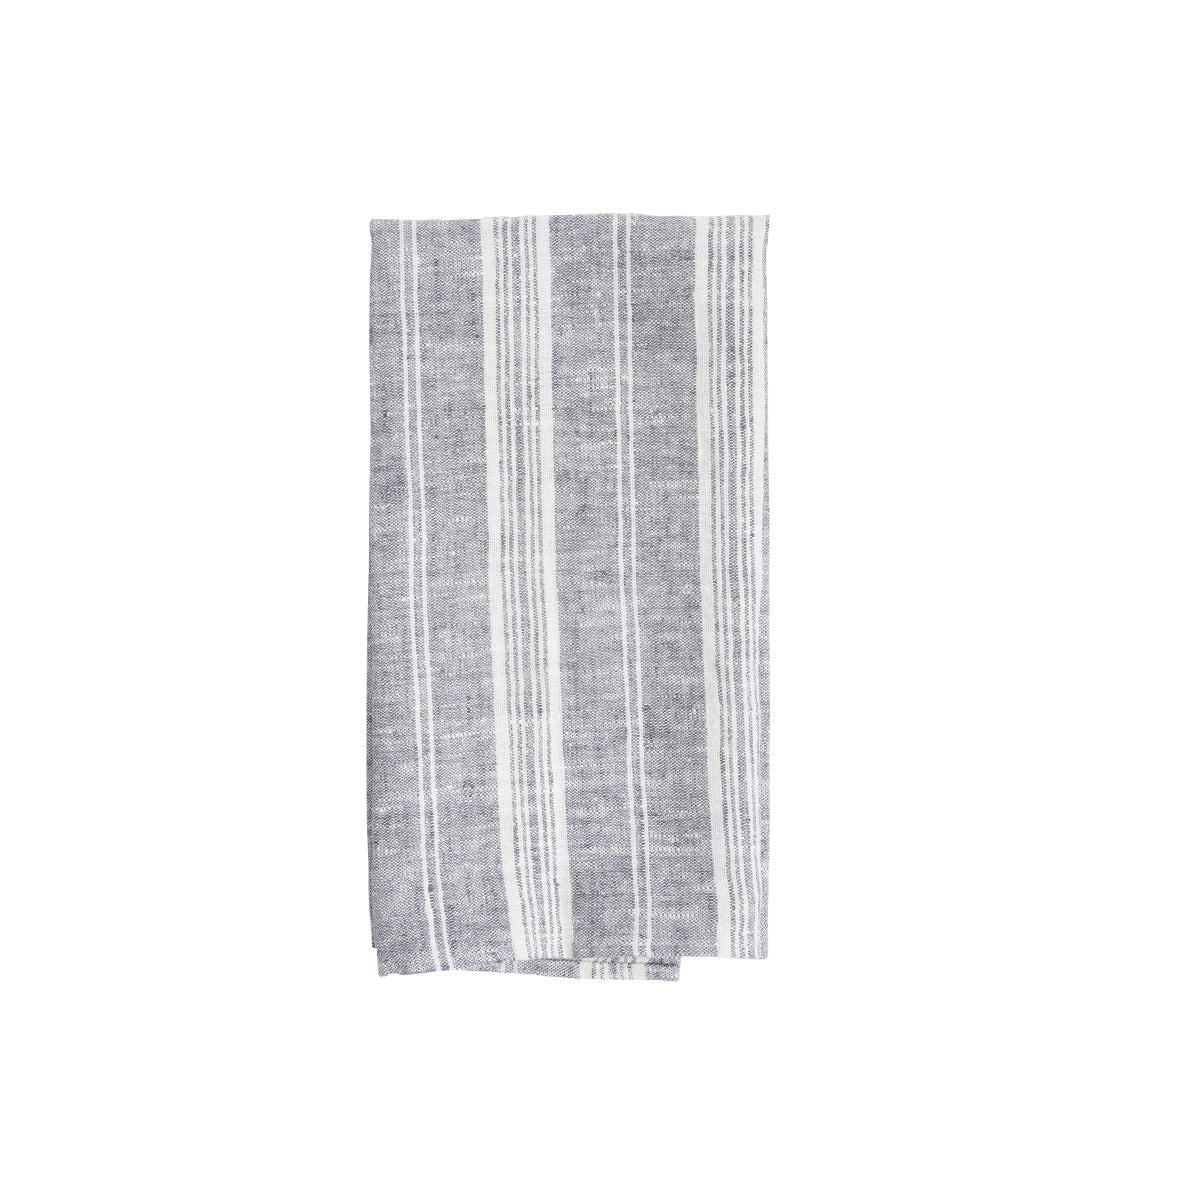 MH Tea Towel - Denim Coastal Stripe